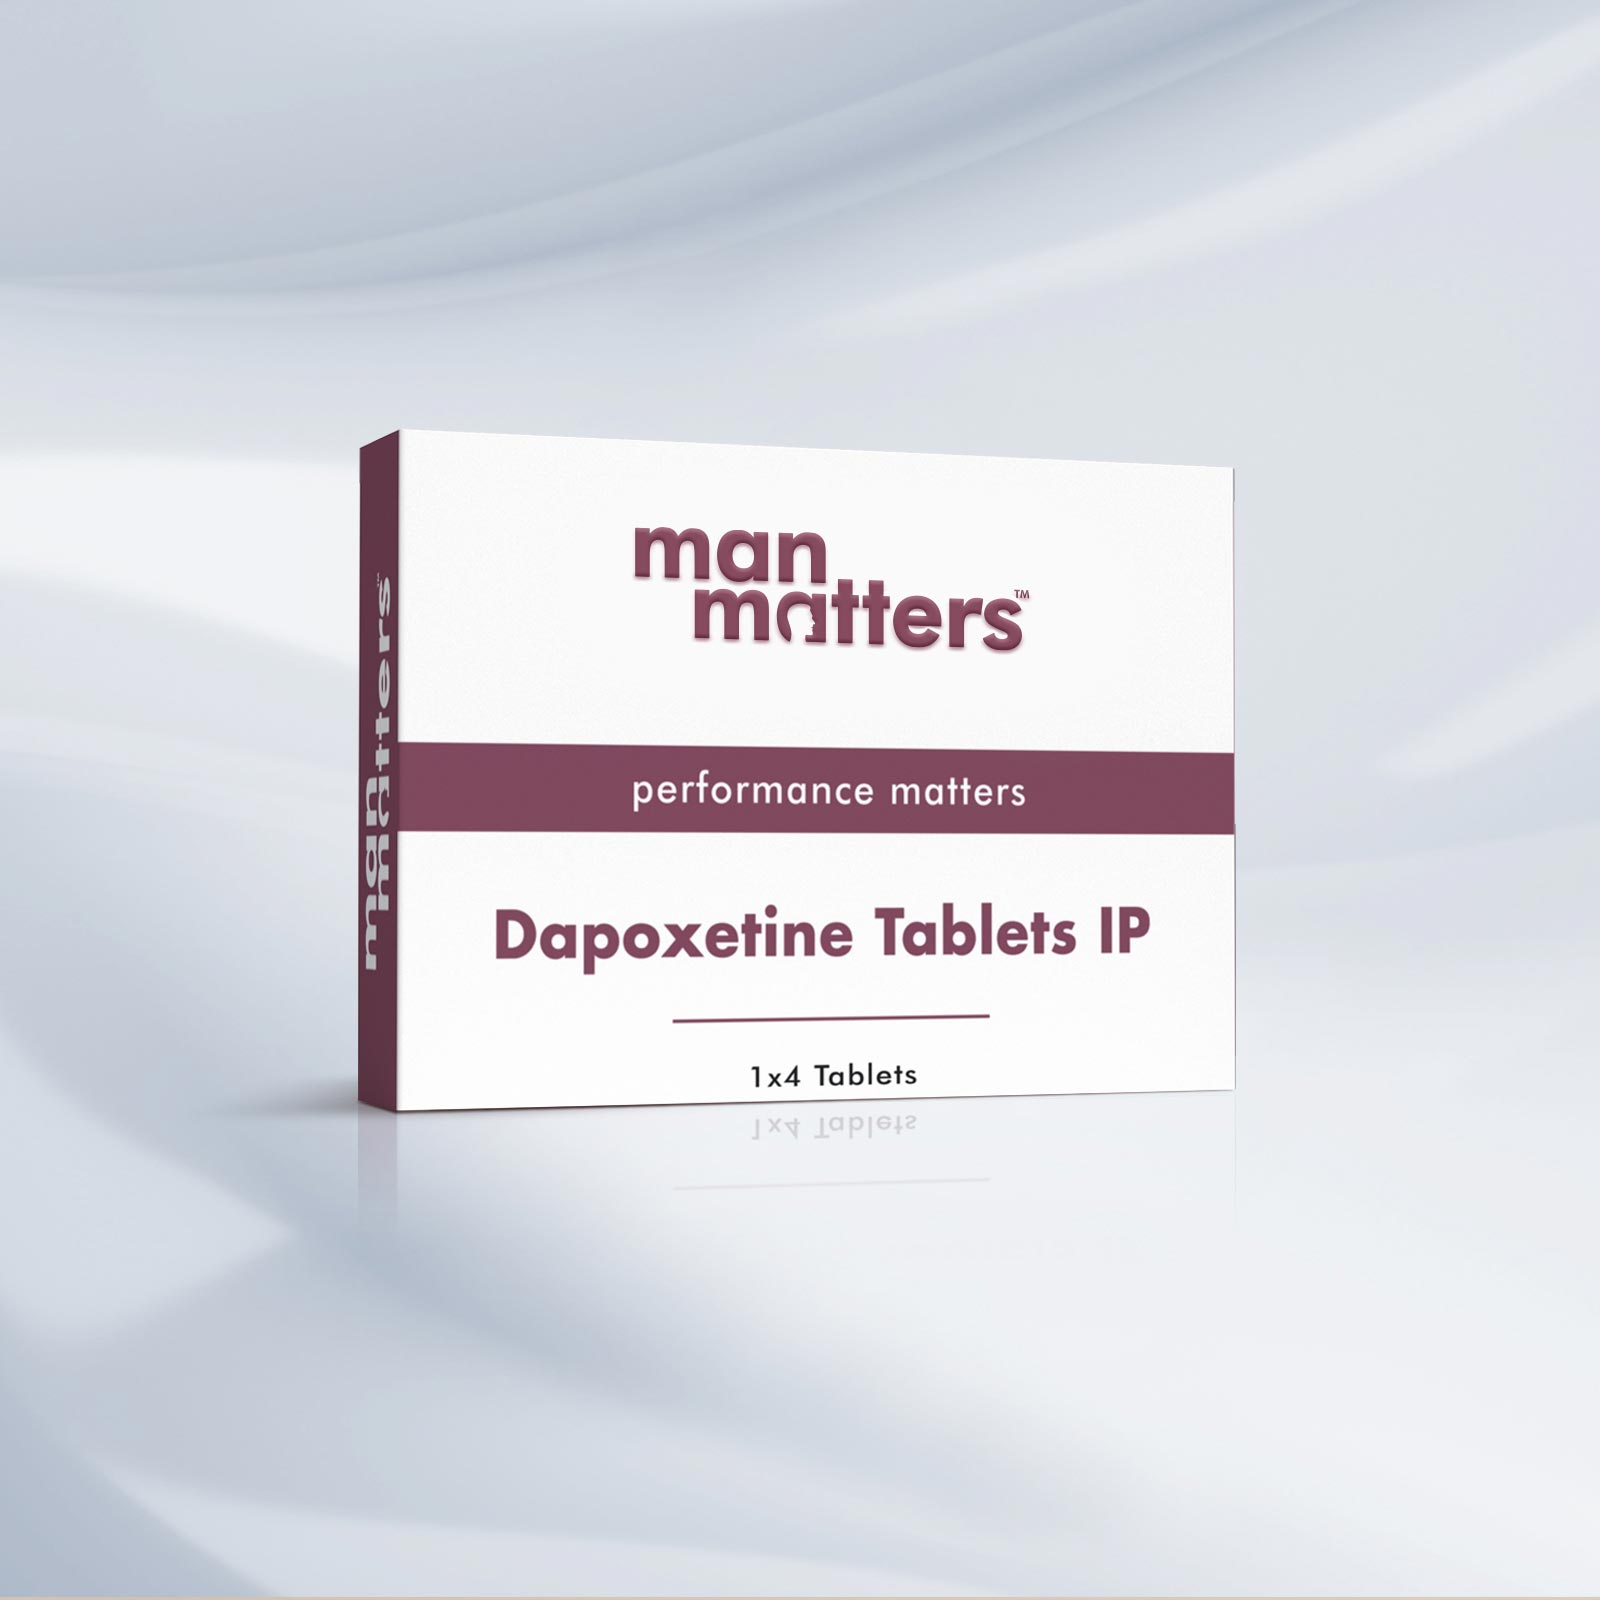 https://manmatters.com/wp-content/uploads/2020/02/dapoxetine-tablets-ip-pdp-d-1.jpg